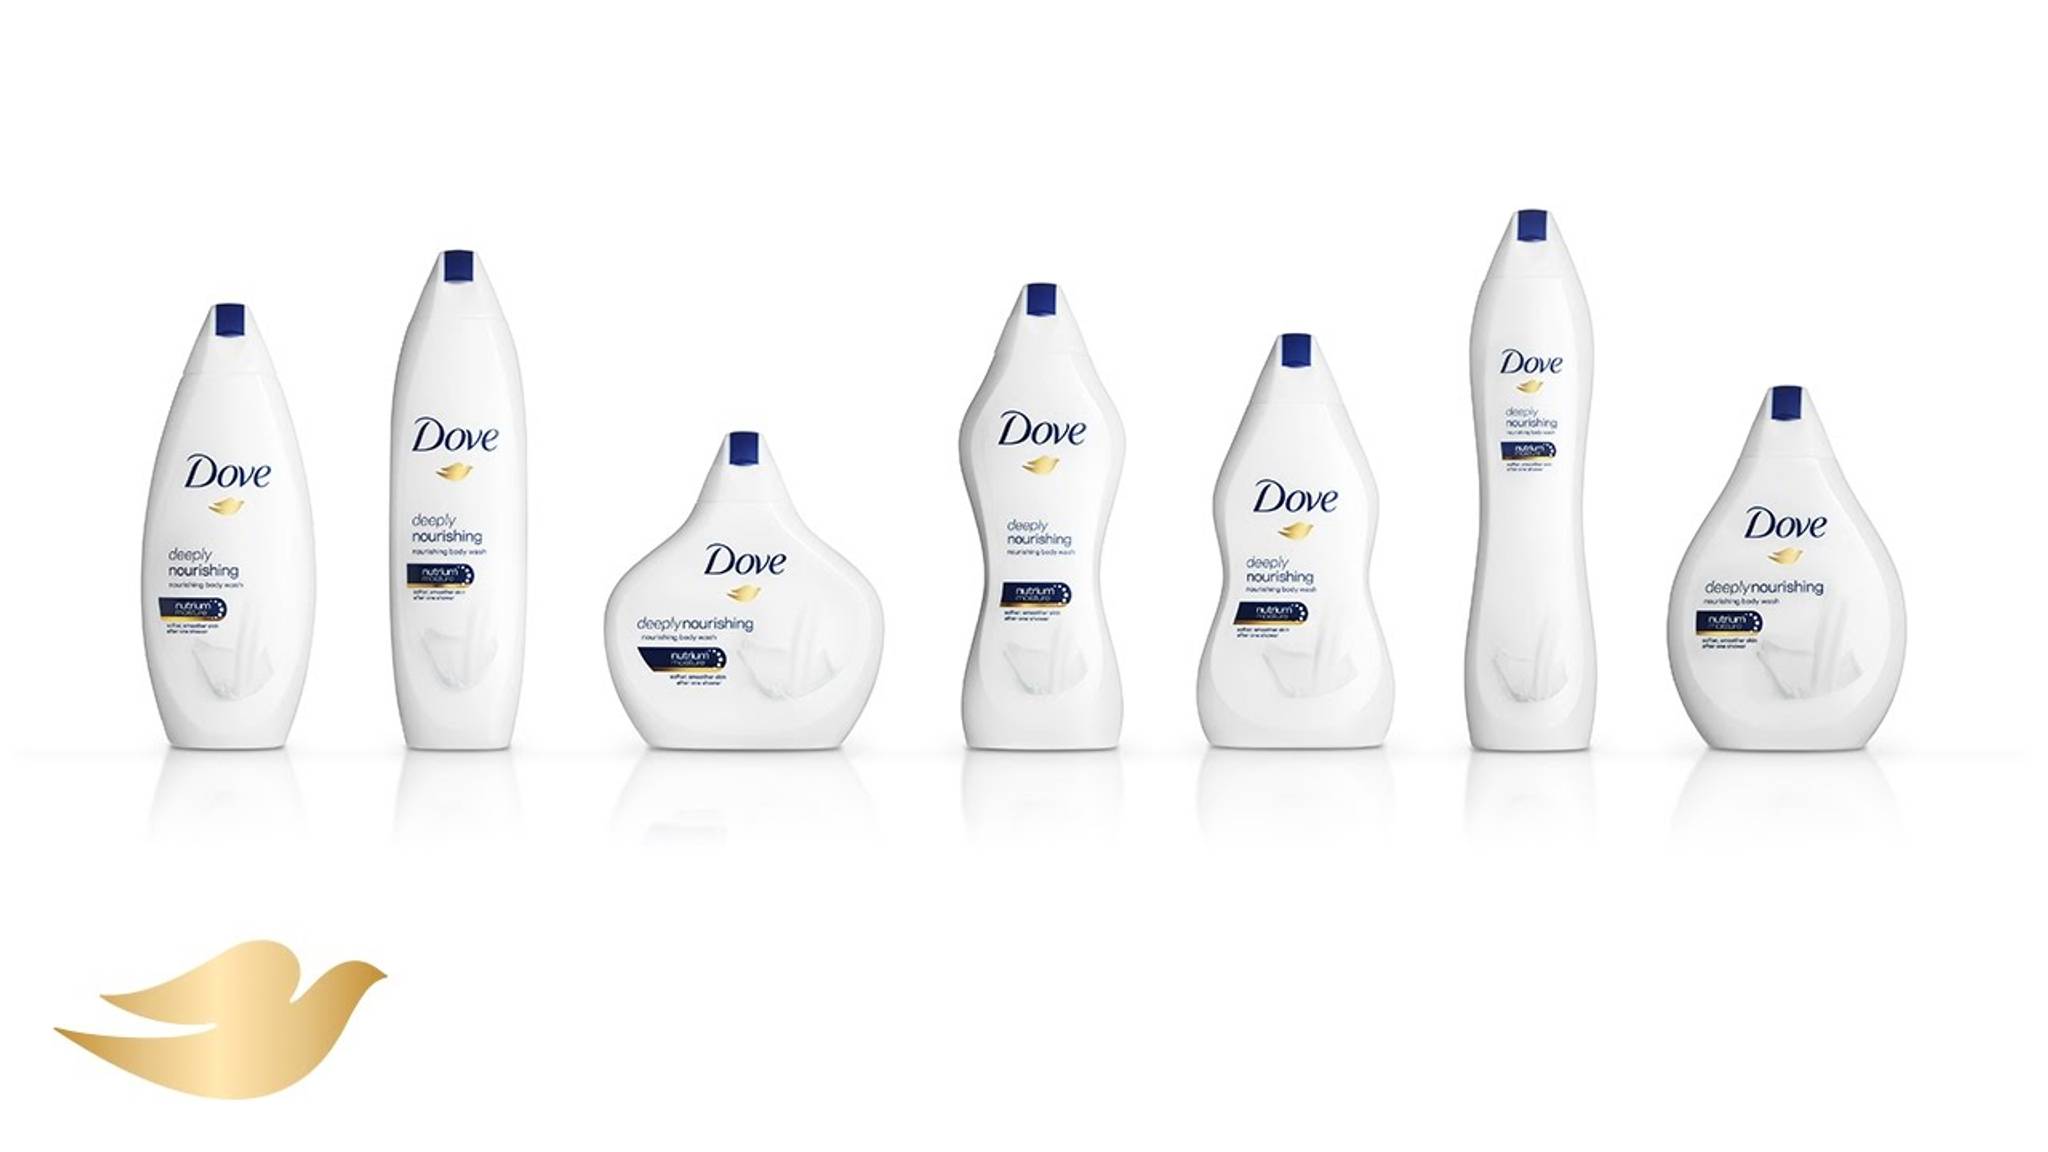 Dove is celebrating body diversity through its bottles